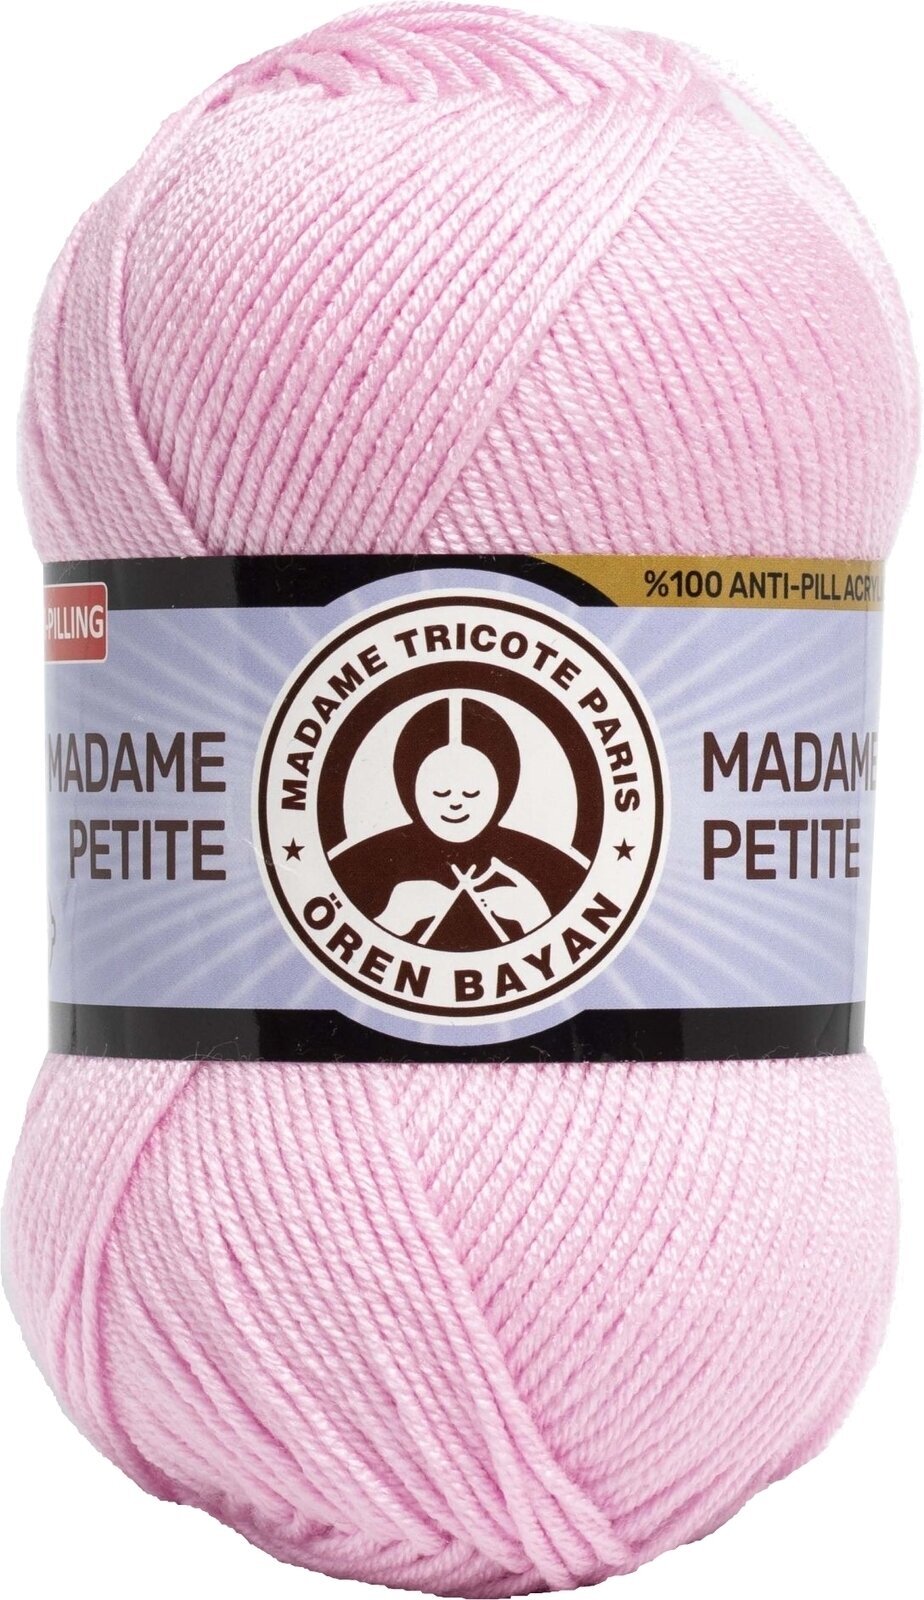 Fil à tricoter Madame Tricote Paris Madame Petite 3848 93 Fil à tricoter